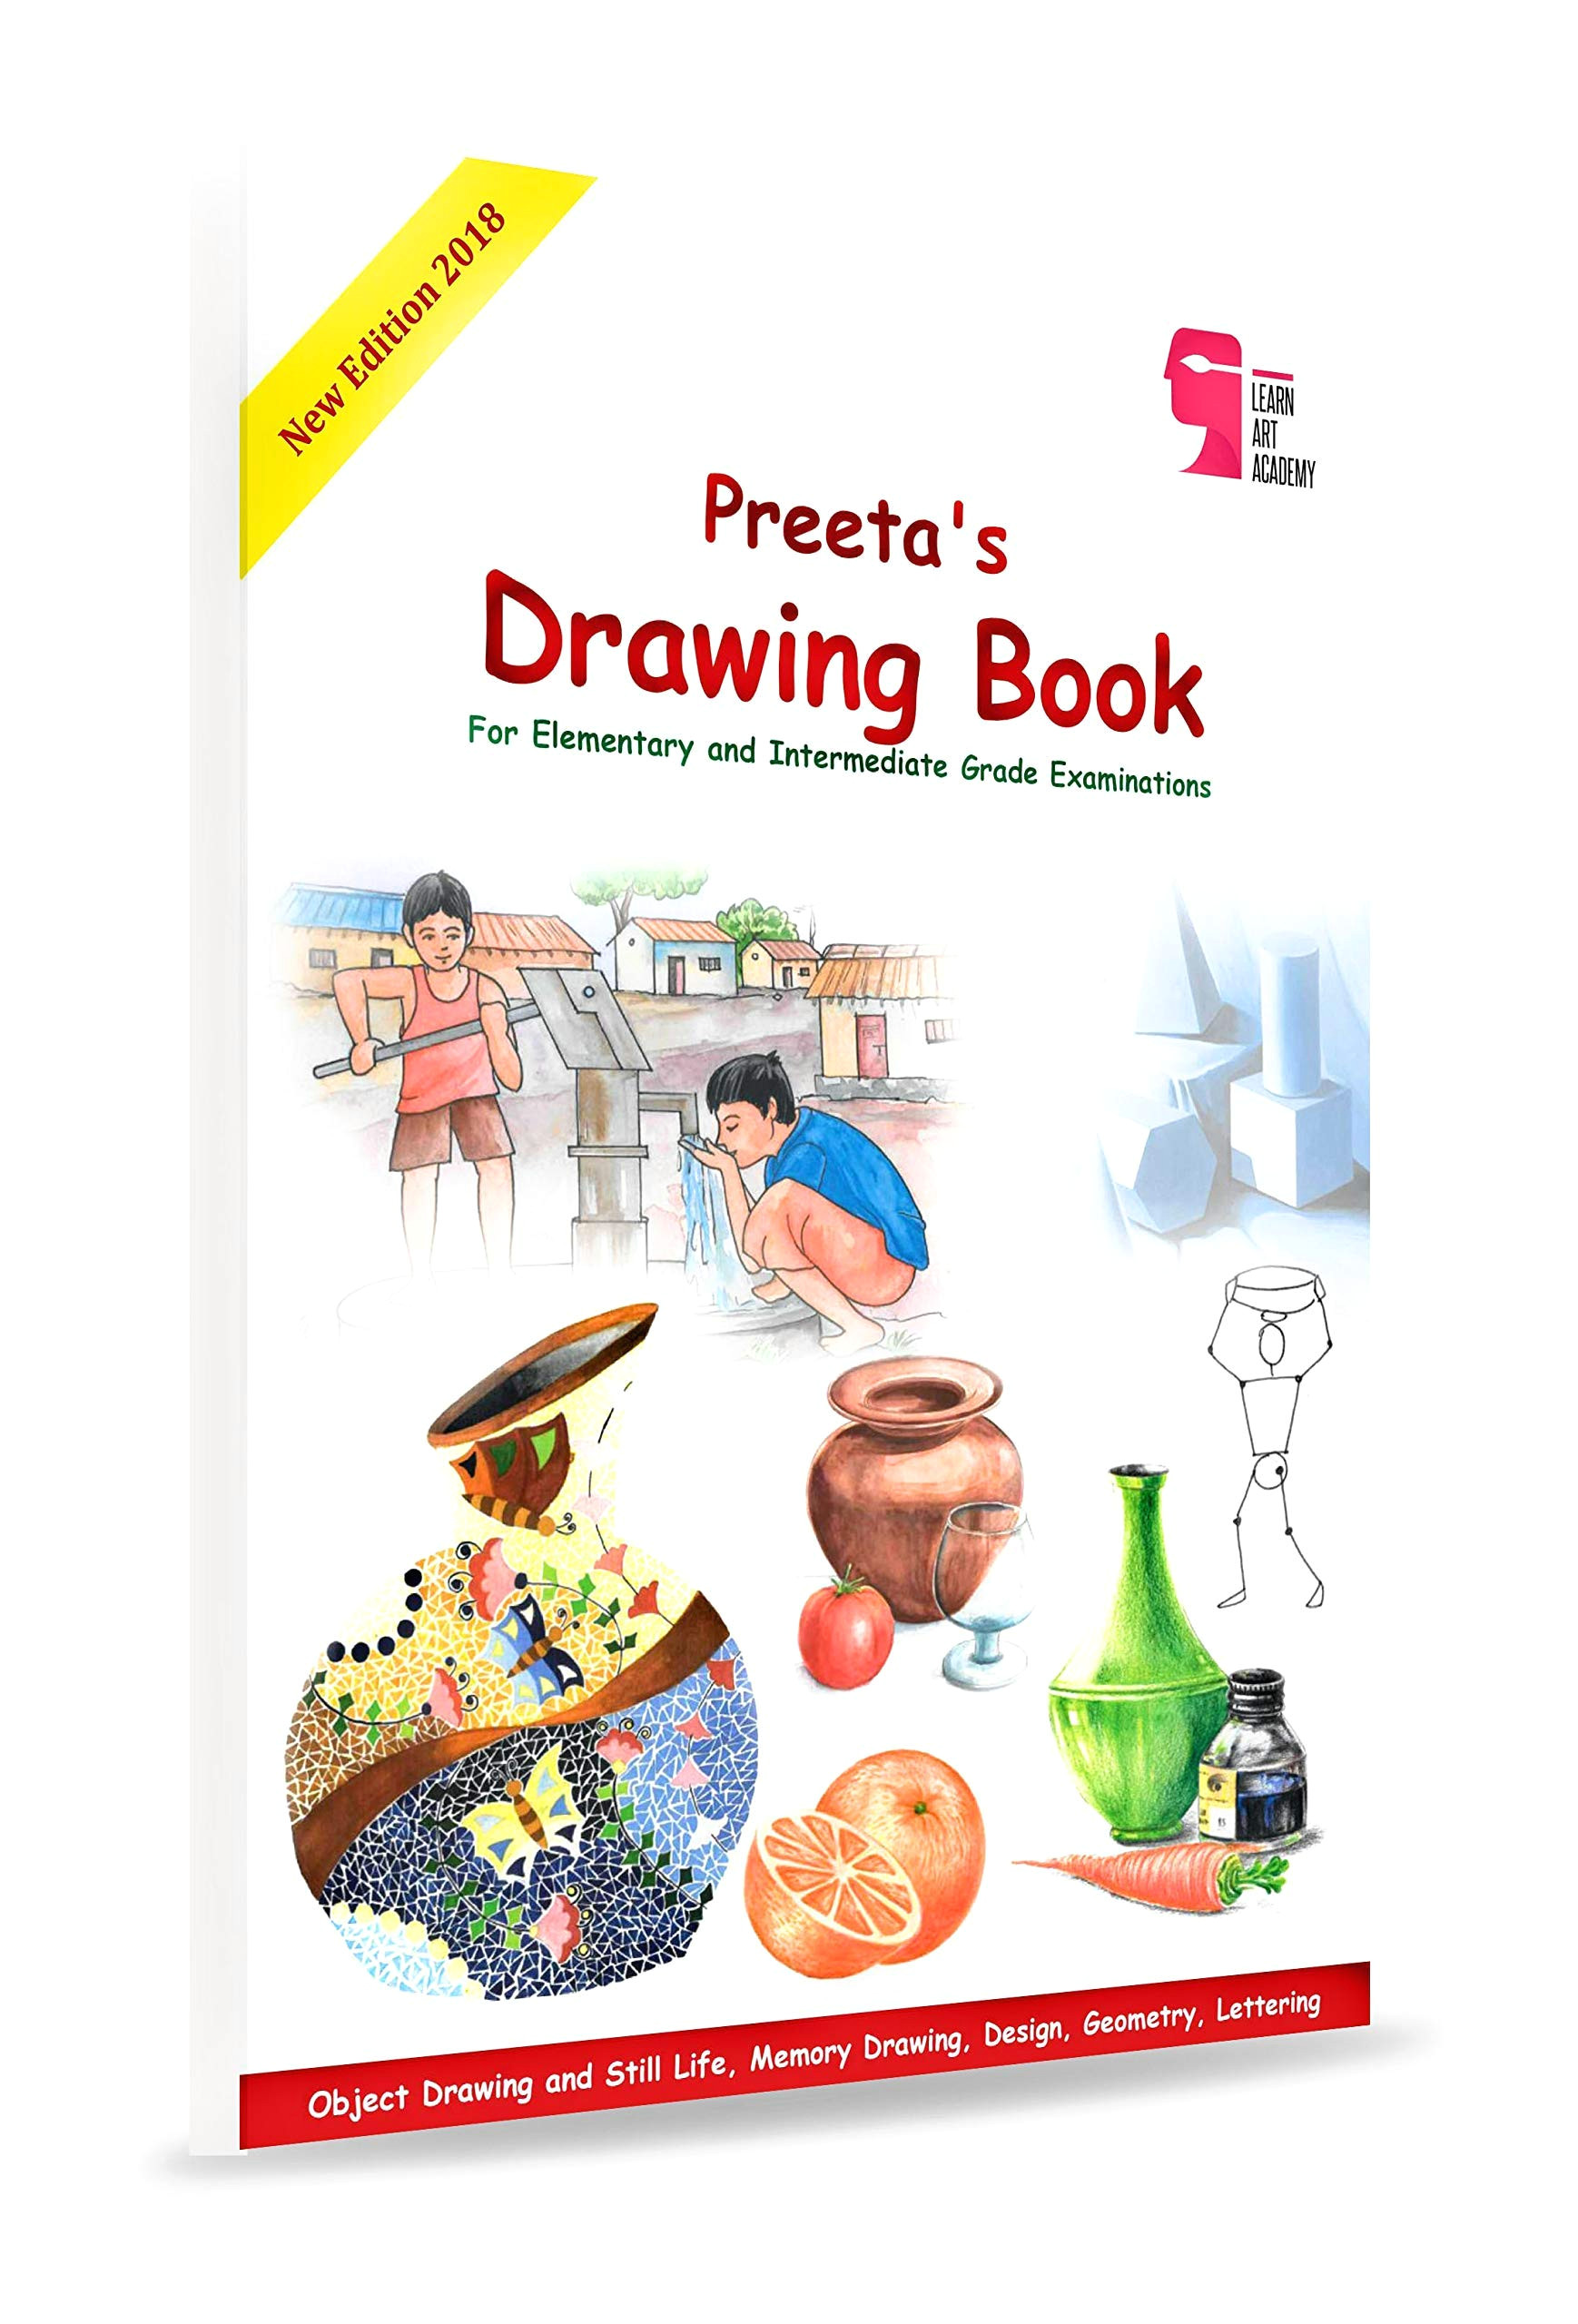 Class 9 Drawing Book Buy Preeta S Drawing Book for Elementary and Intermediate Grade